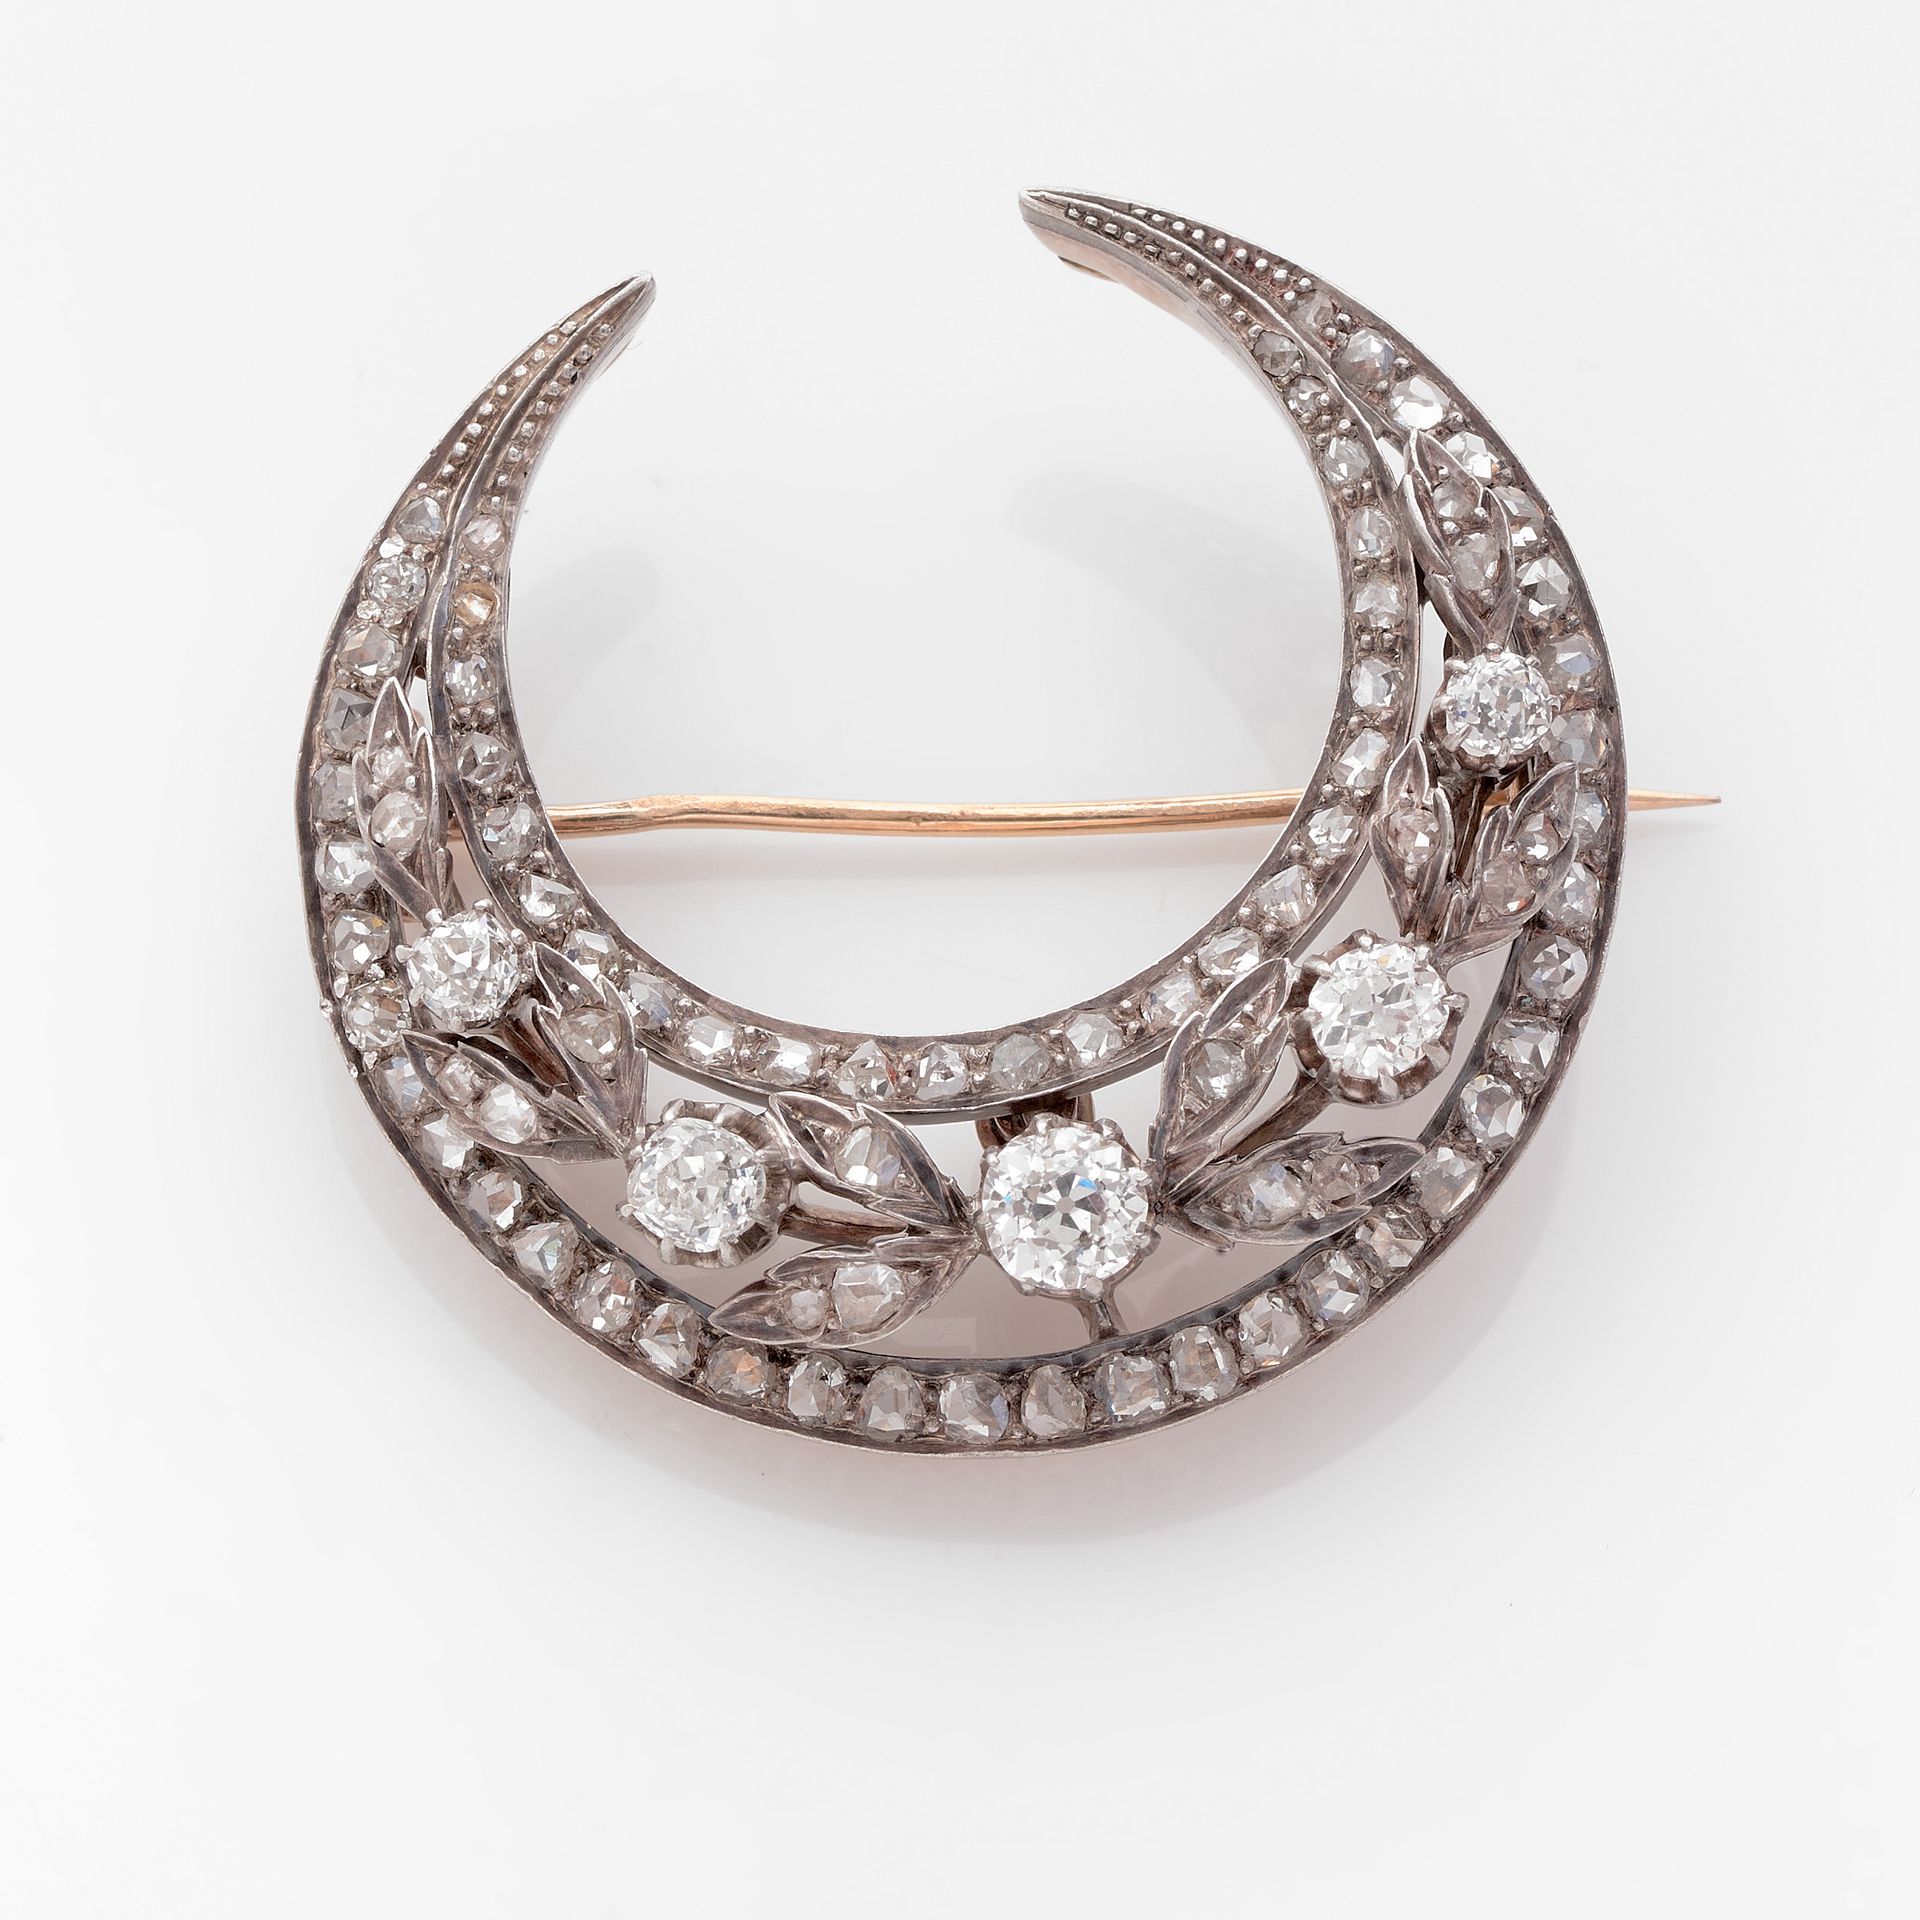 Null 月牙形胸针

黄金和银质新月形胸针，镶有玫瑰式切割钻石，中心为叶子图案，并装饰有老式切割钻石。

19世纪。

有大师级印记的痕迹，有编号。

一枚玫&hellip;